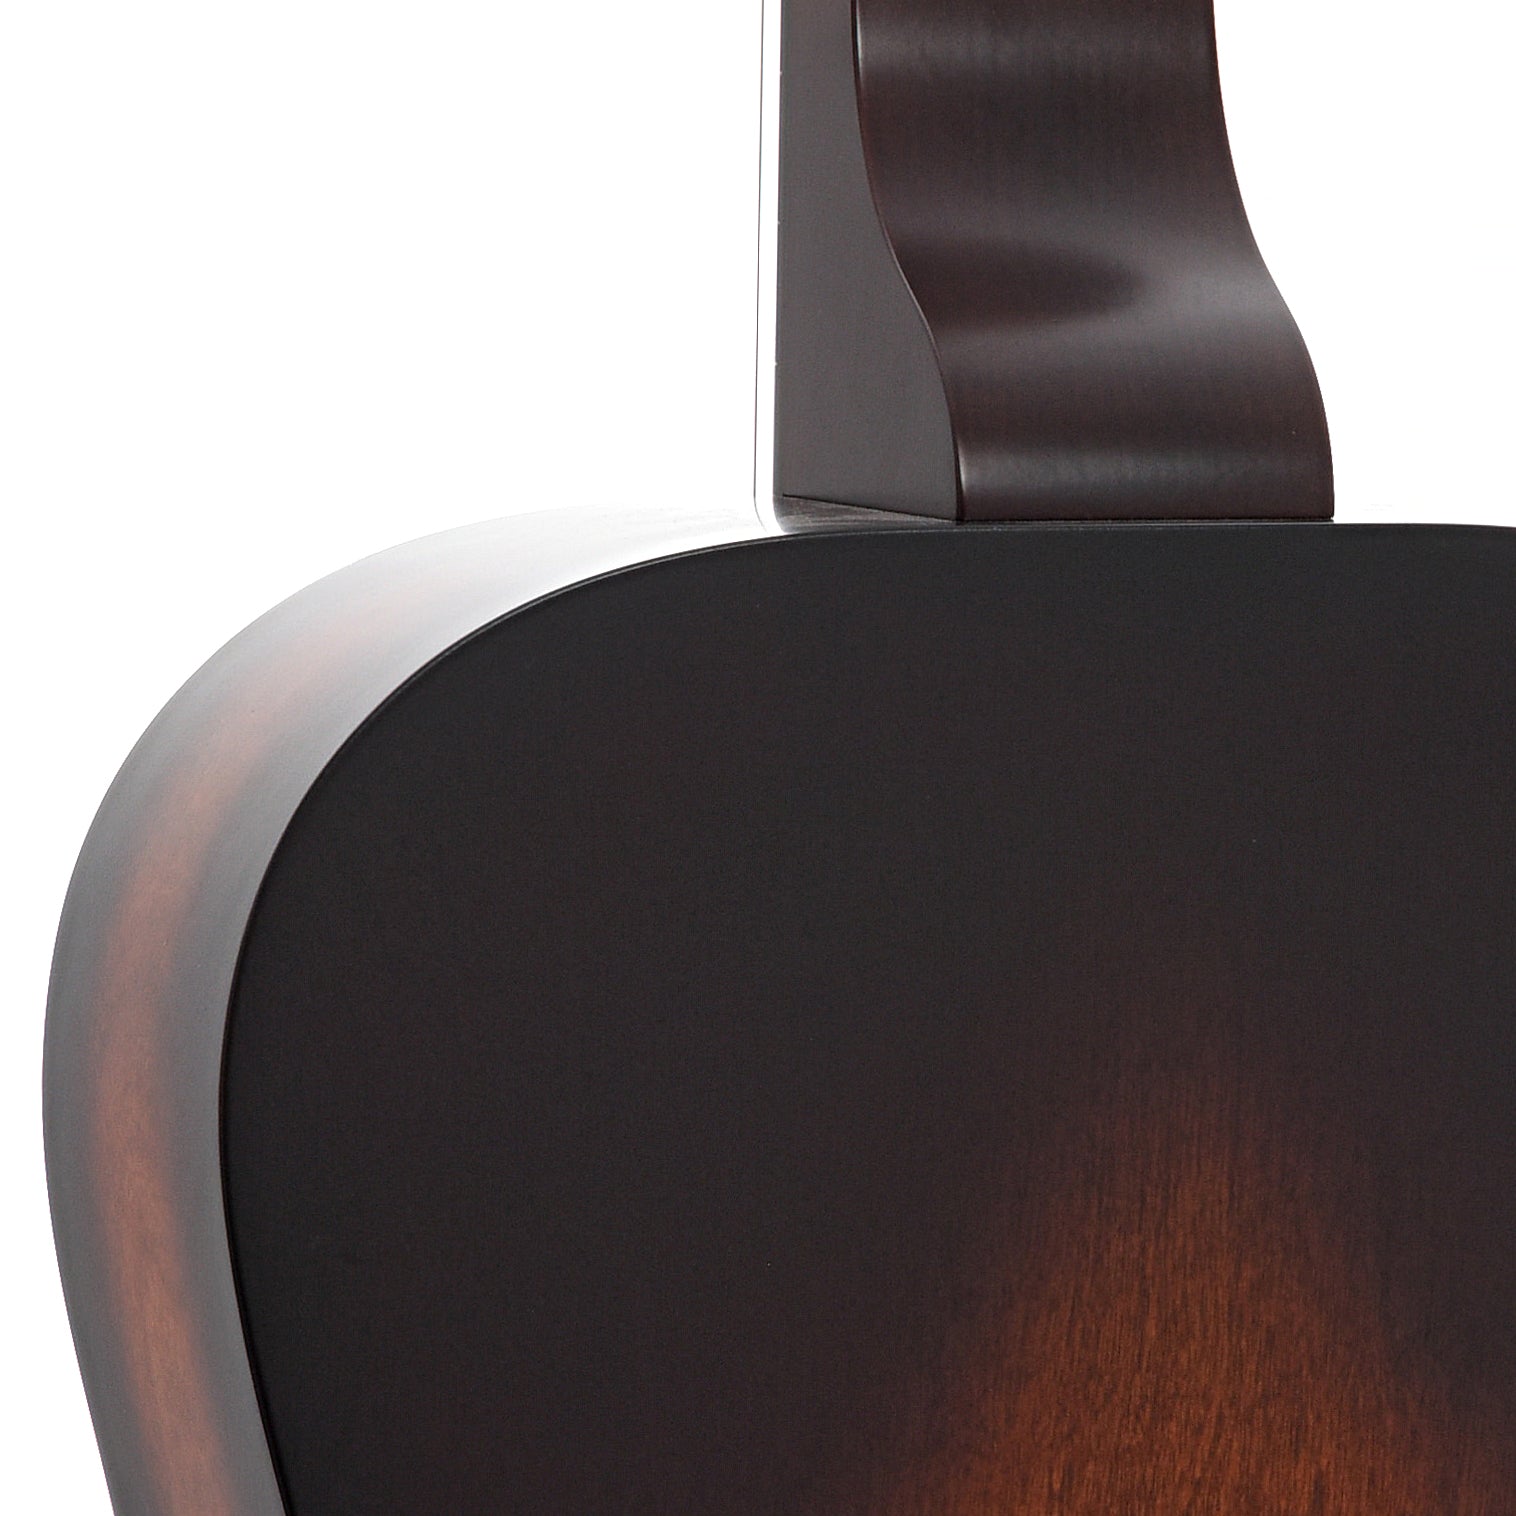 Heel of Beard Josh Swift Standard Squareneck Resonator Guitar with Signature Inlays